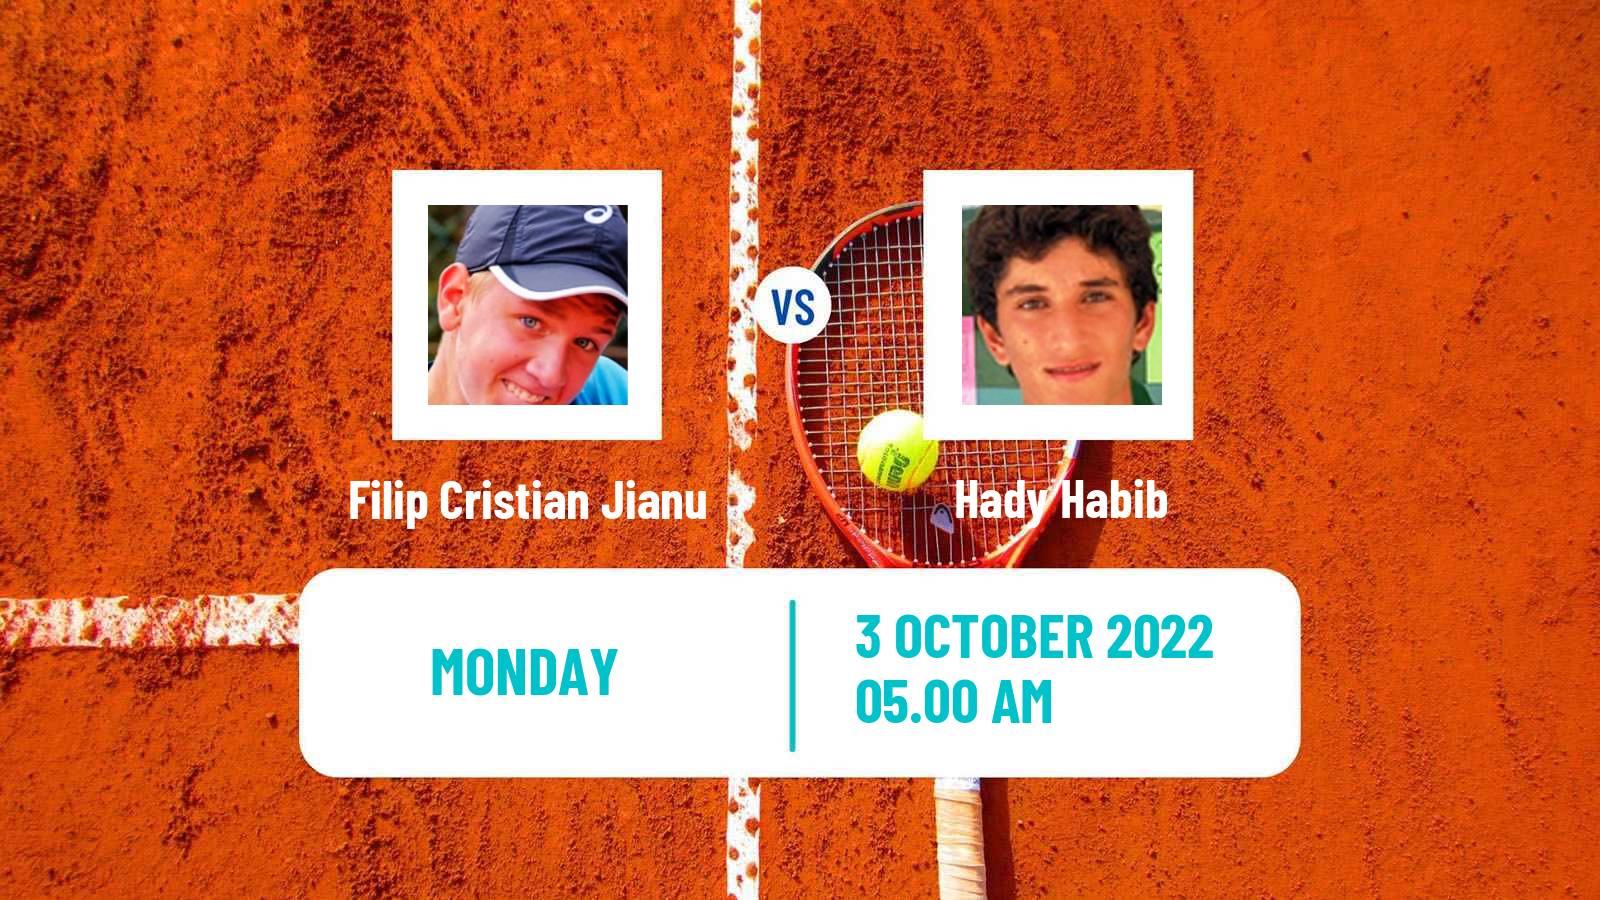 Tennis ATP Challenger Filip Cristian Jianu - Hady Habib